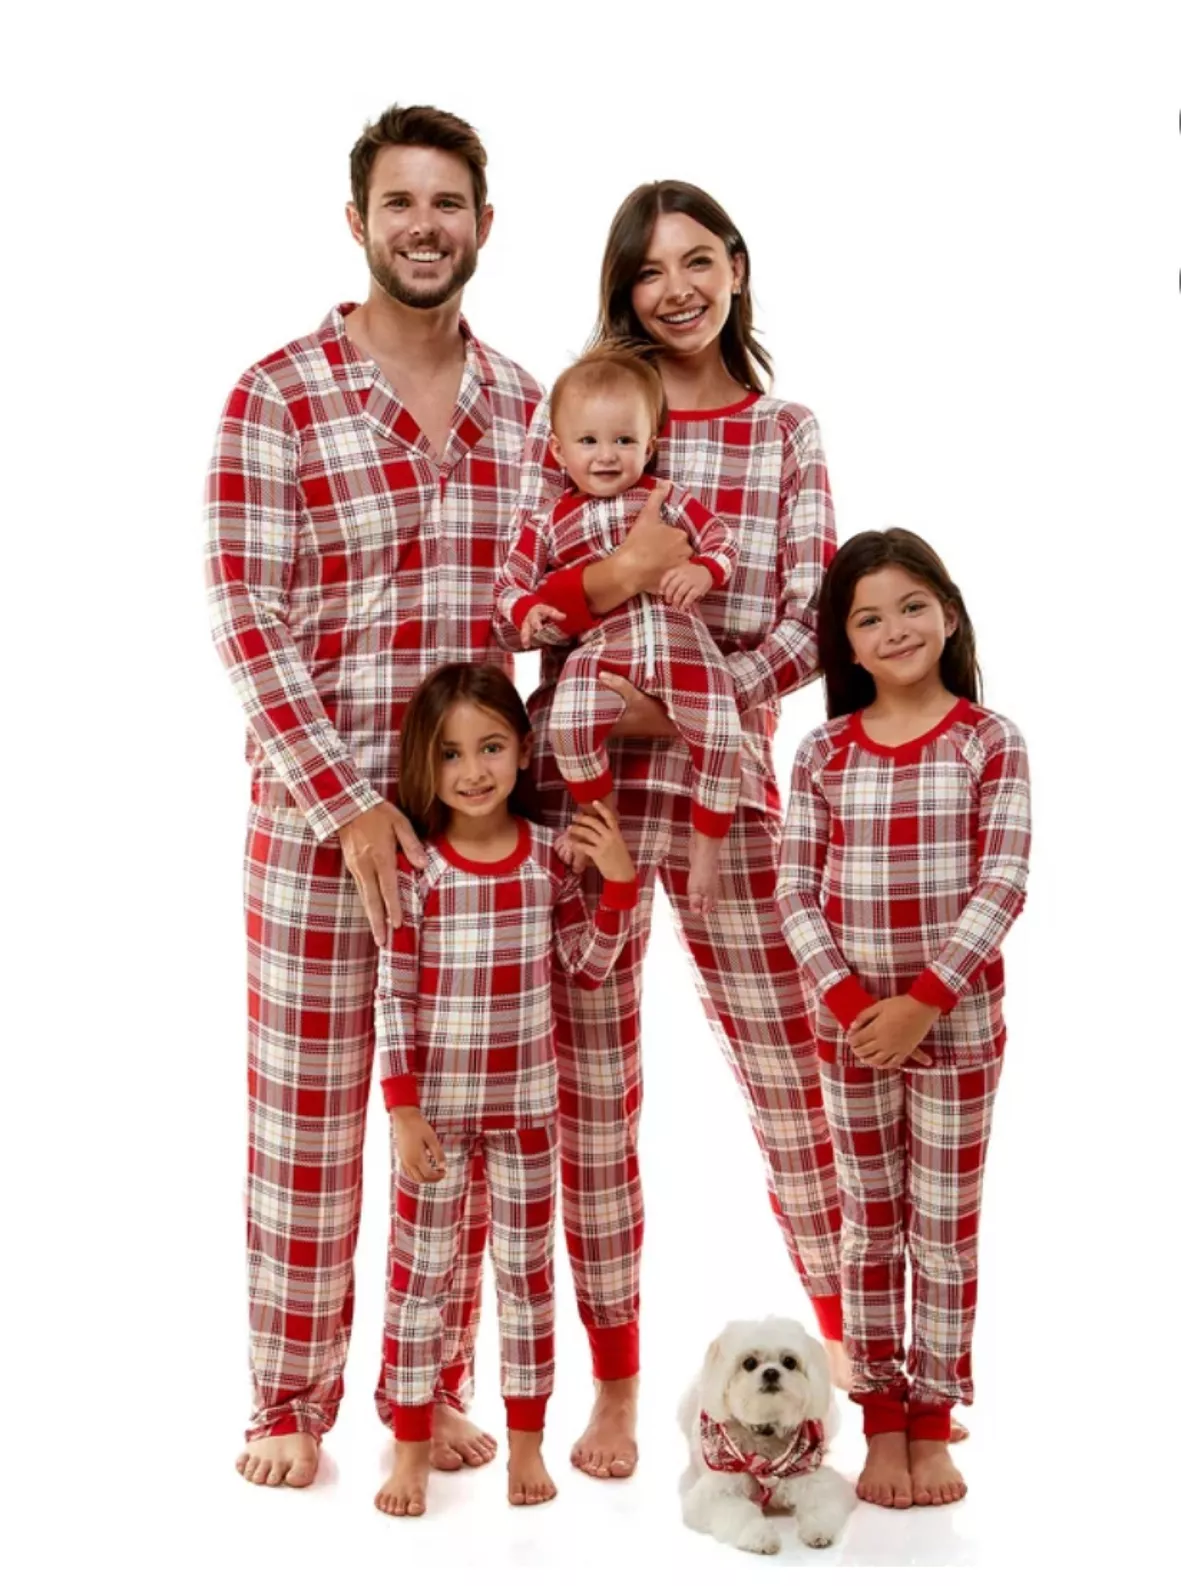 Derek Heart Pet Plaid Christmas Crew Matching Family Pajamas Bandana 